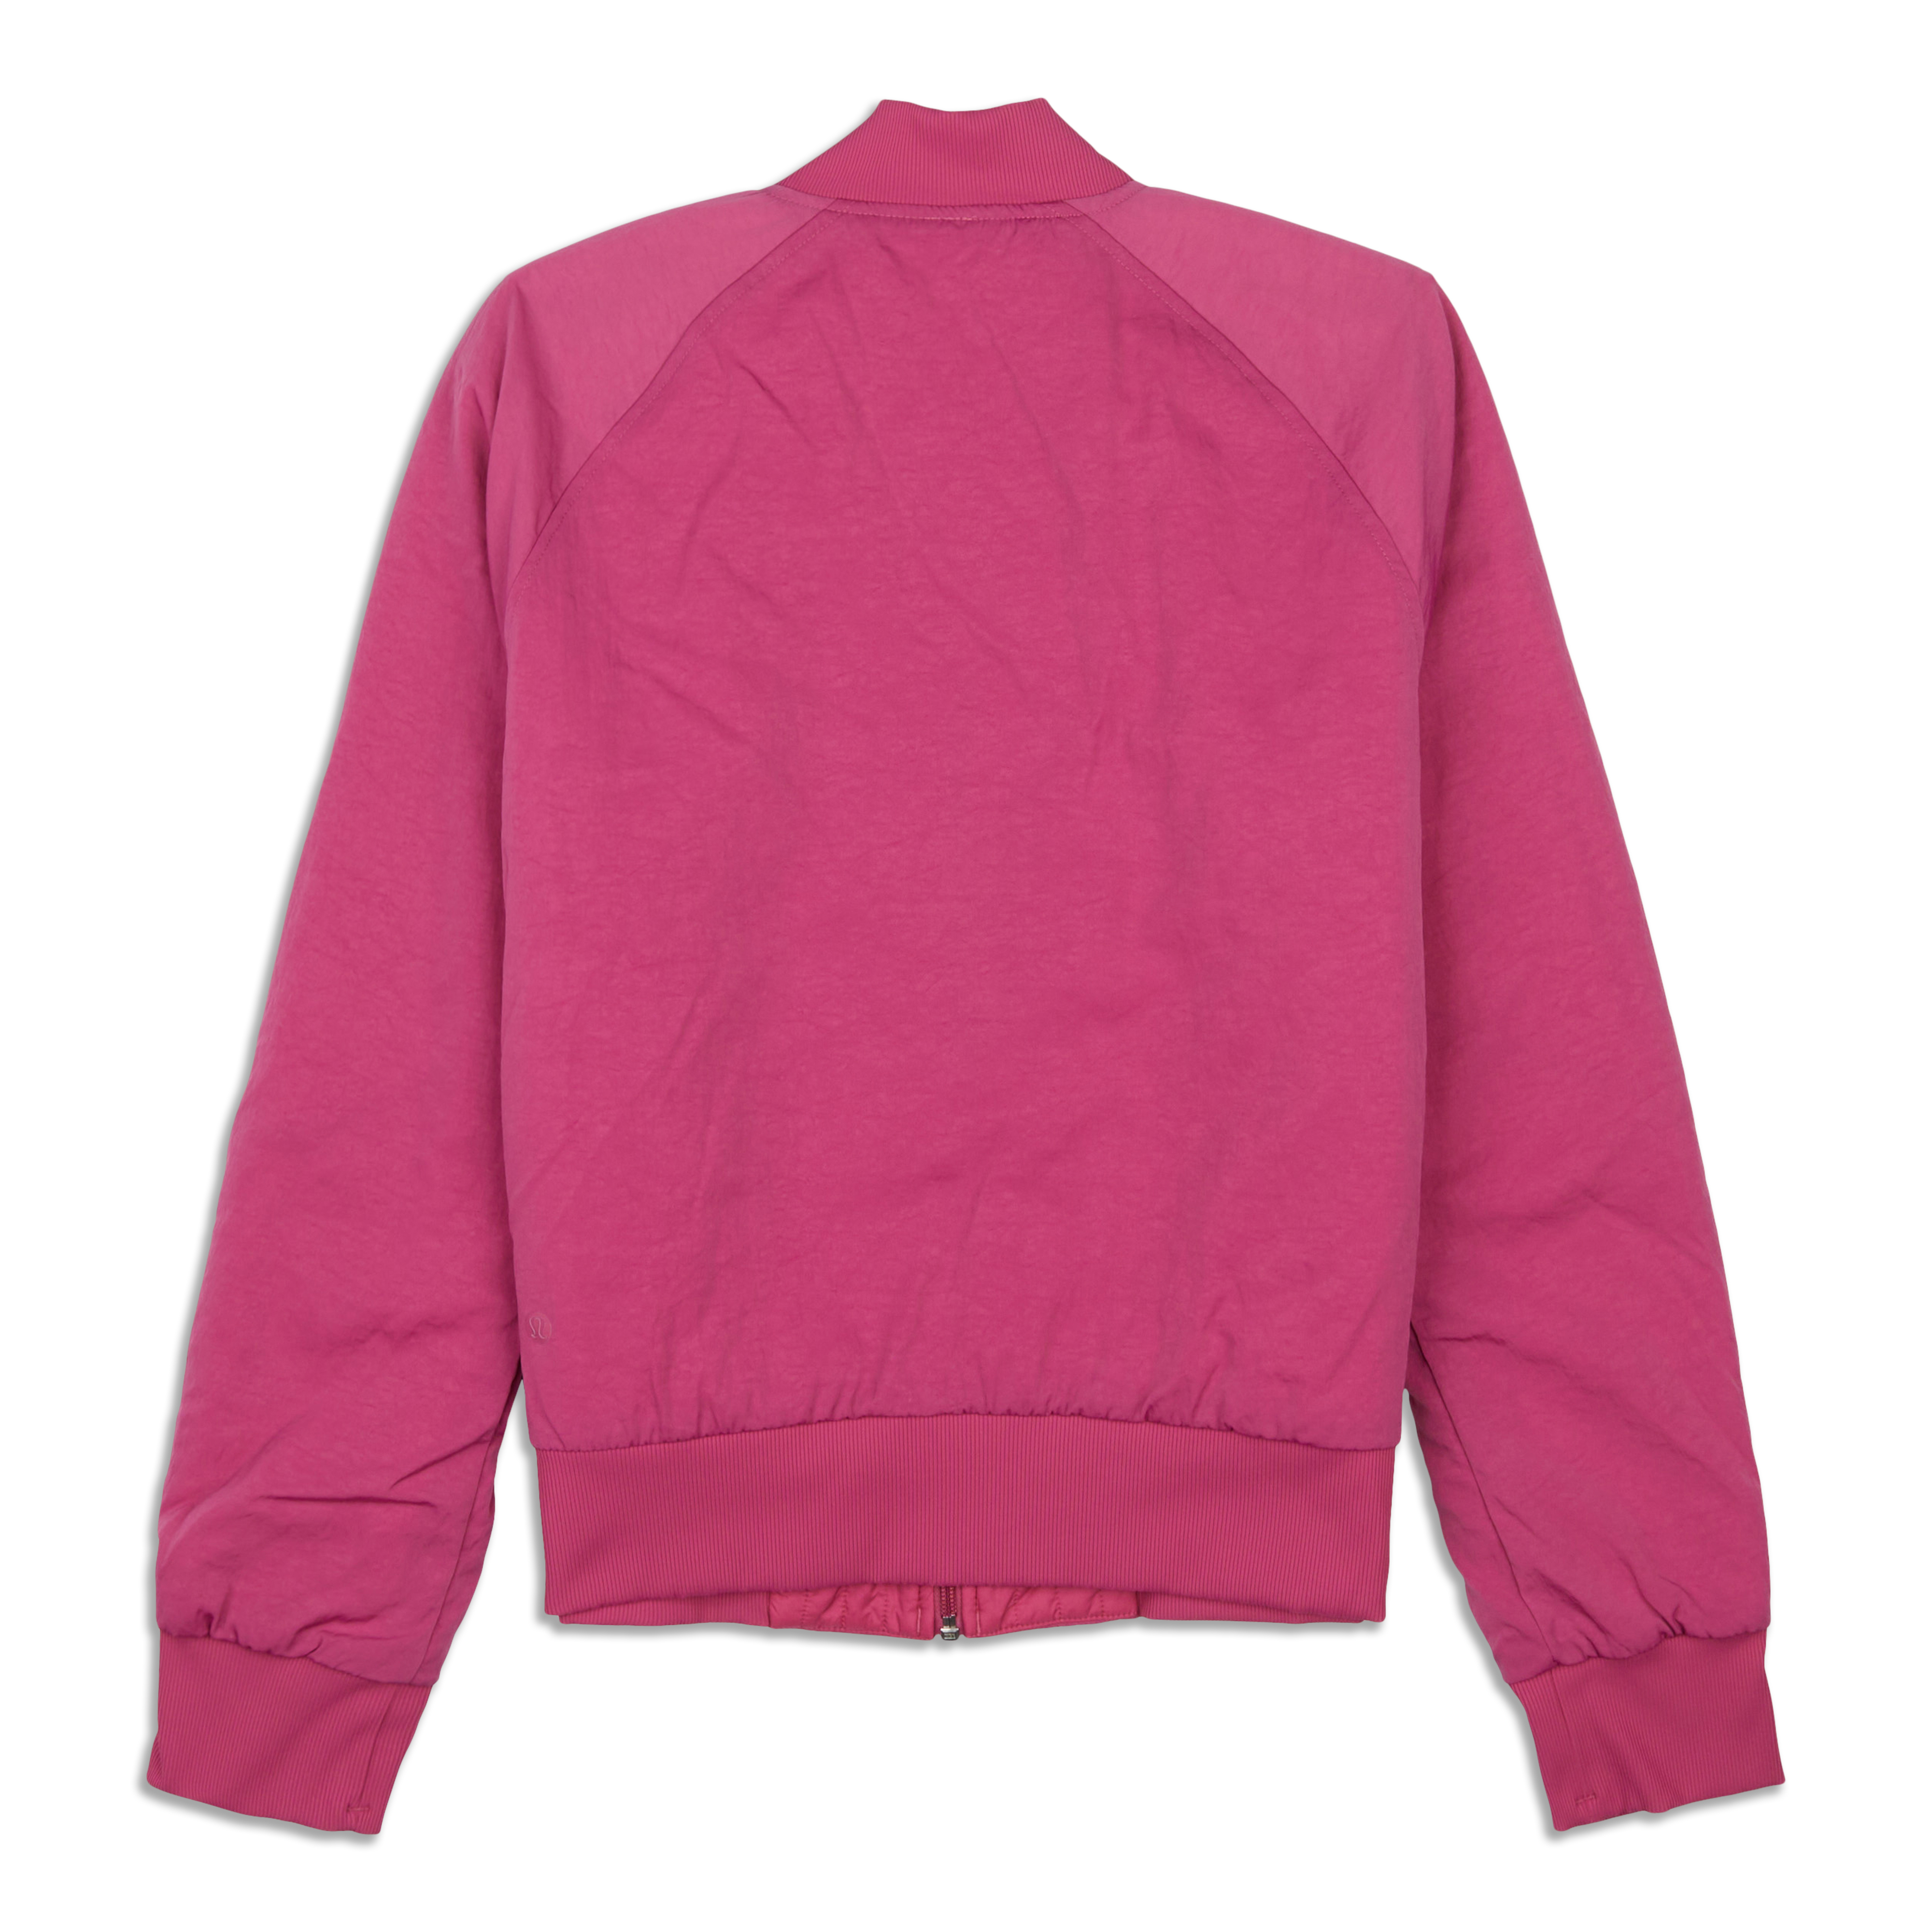 Lululemon Sleet Street Jacket - Pink Lychee - Size 6